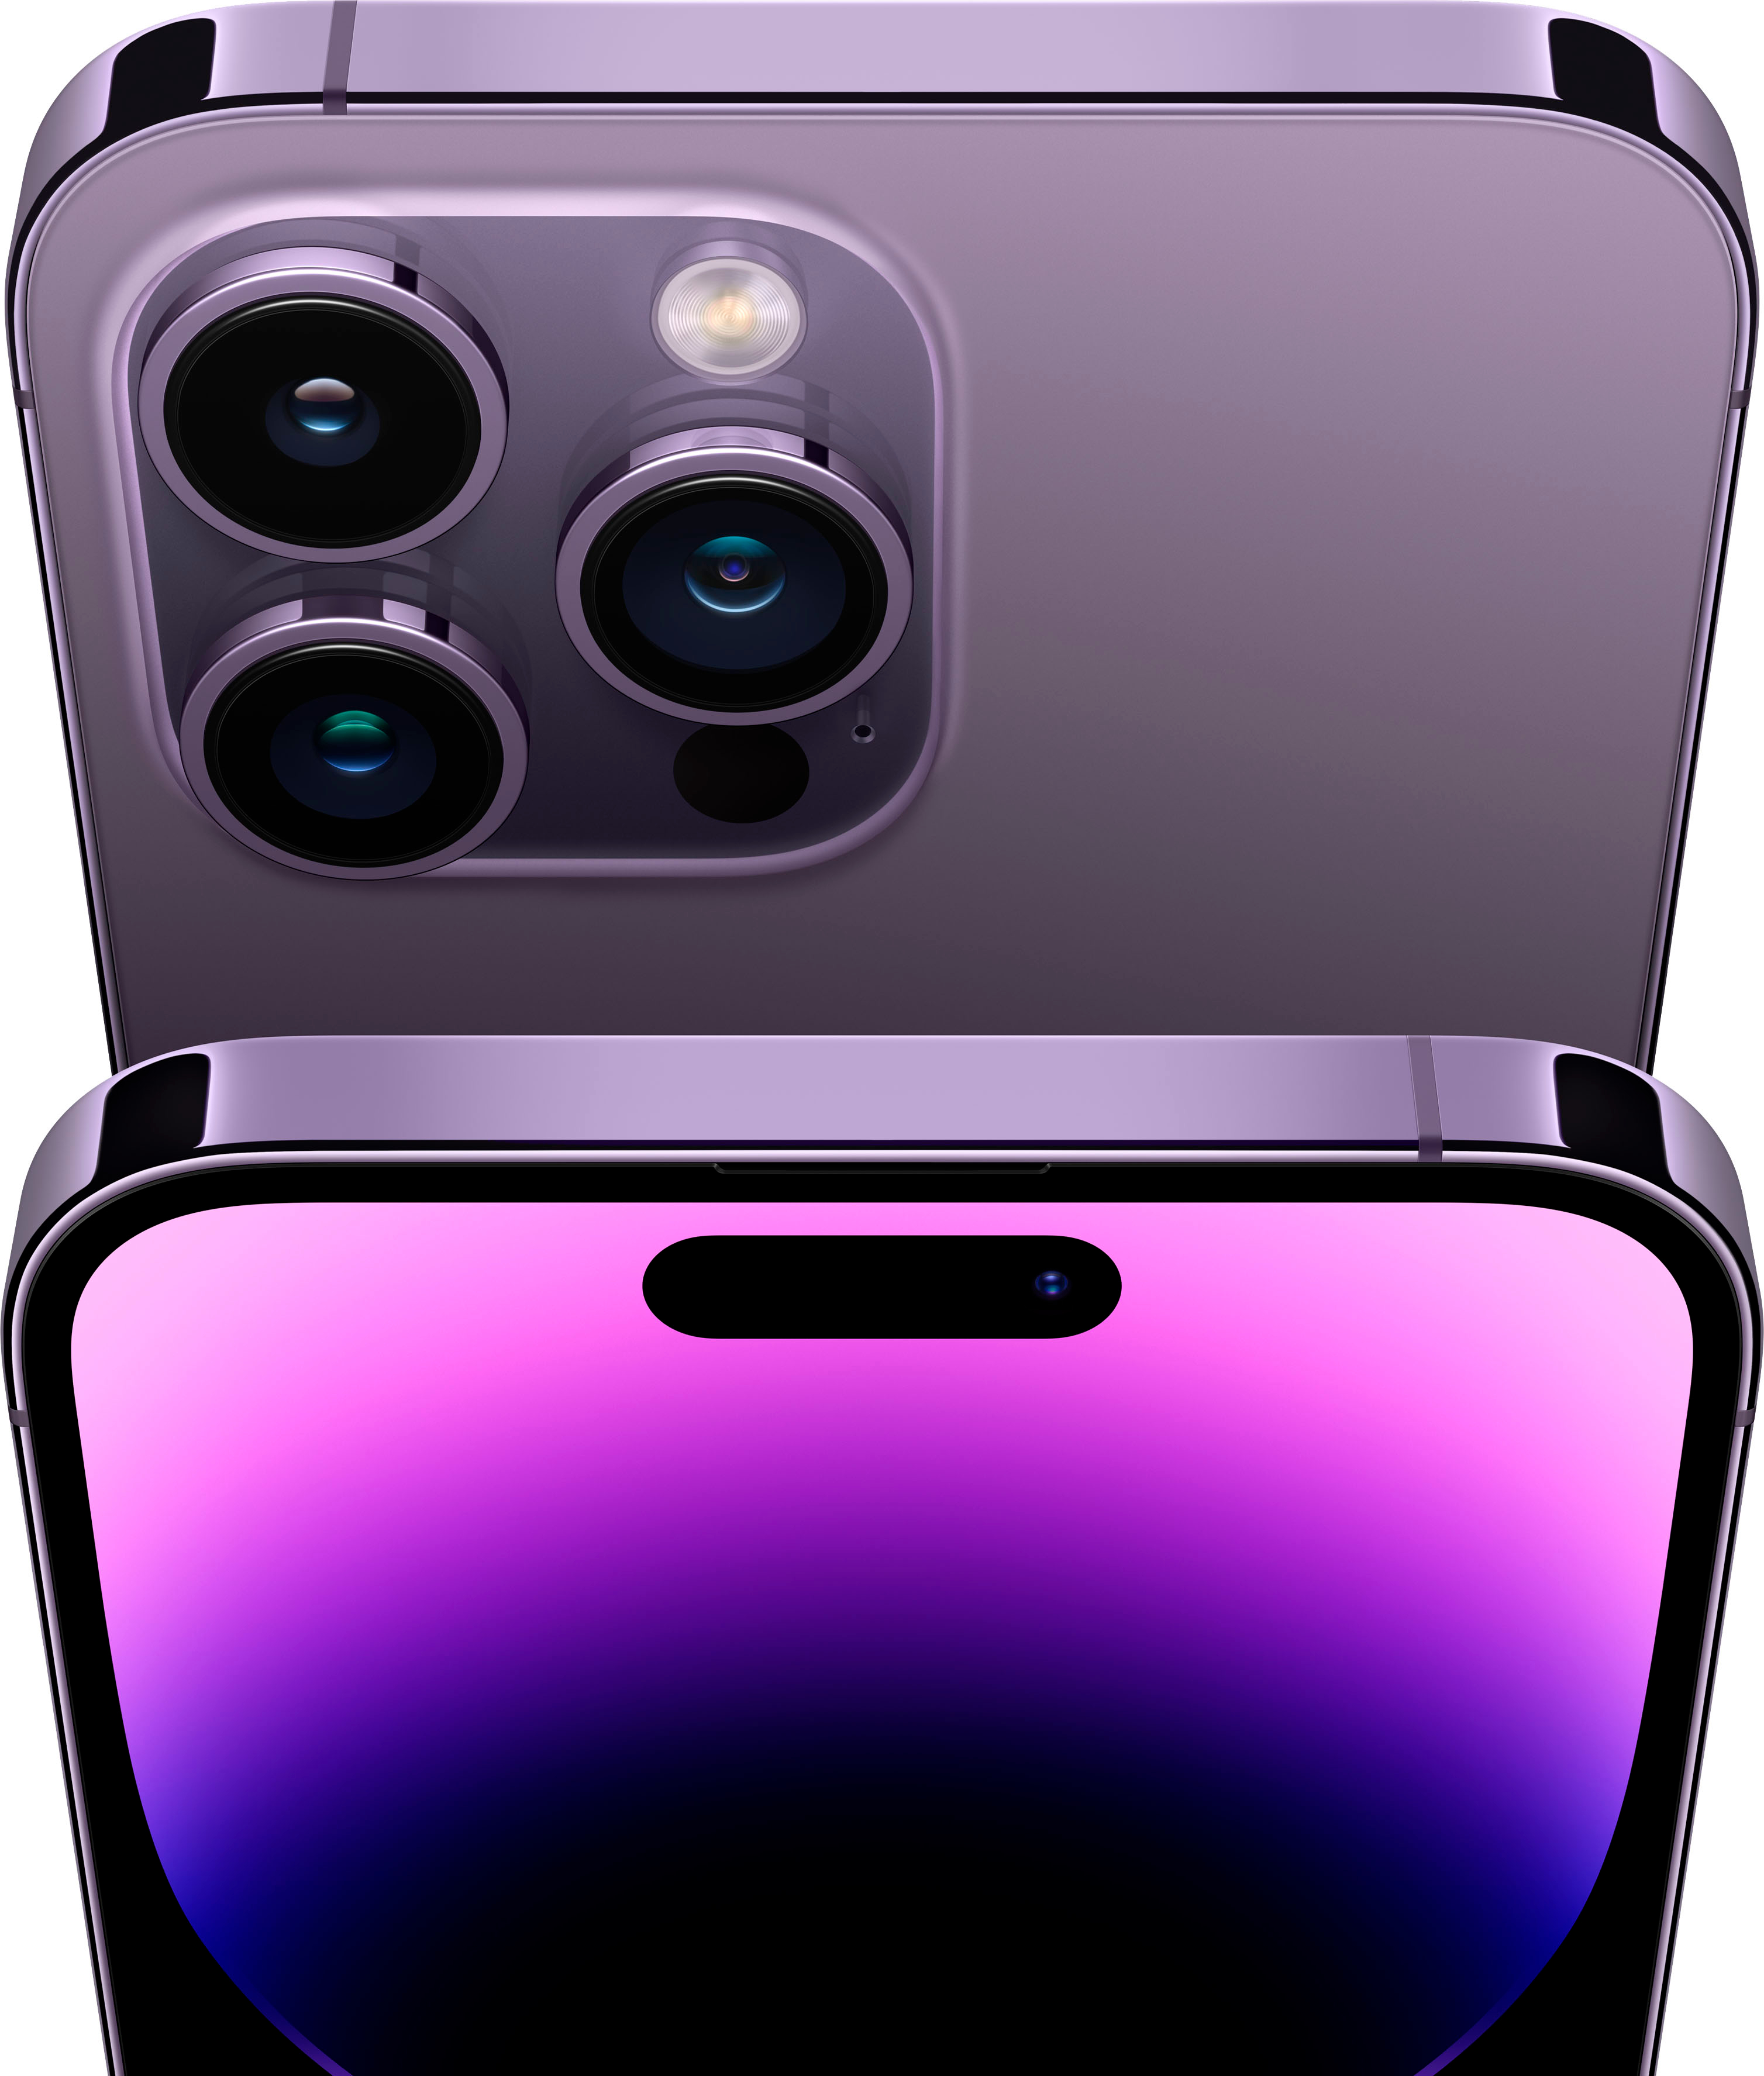 Apple iPhone 14 Pro 256GB Deep Purple (T-Mobile) MQ1D3LL/A - Best Buy